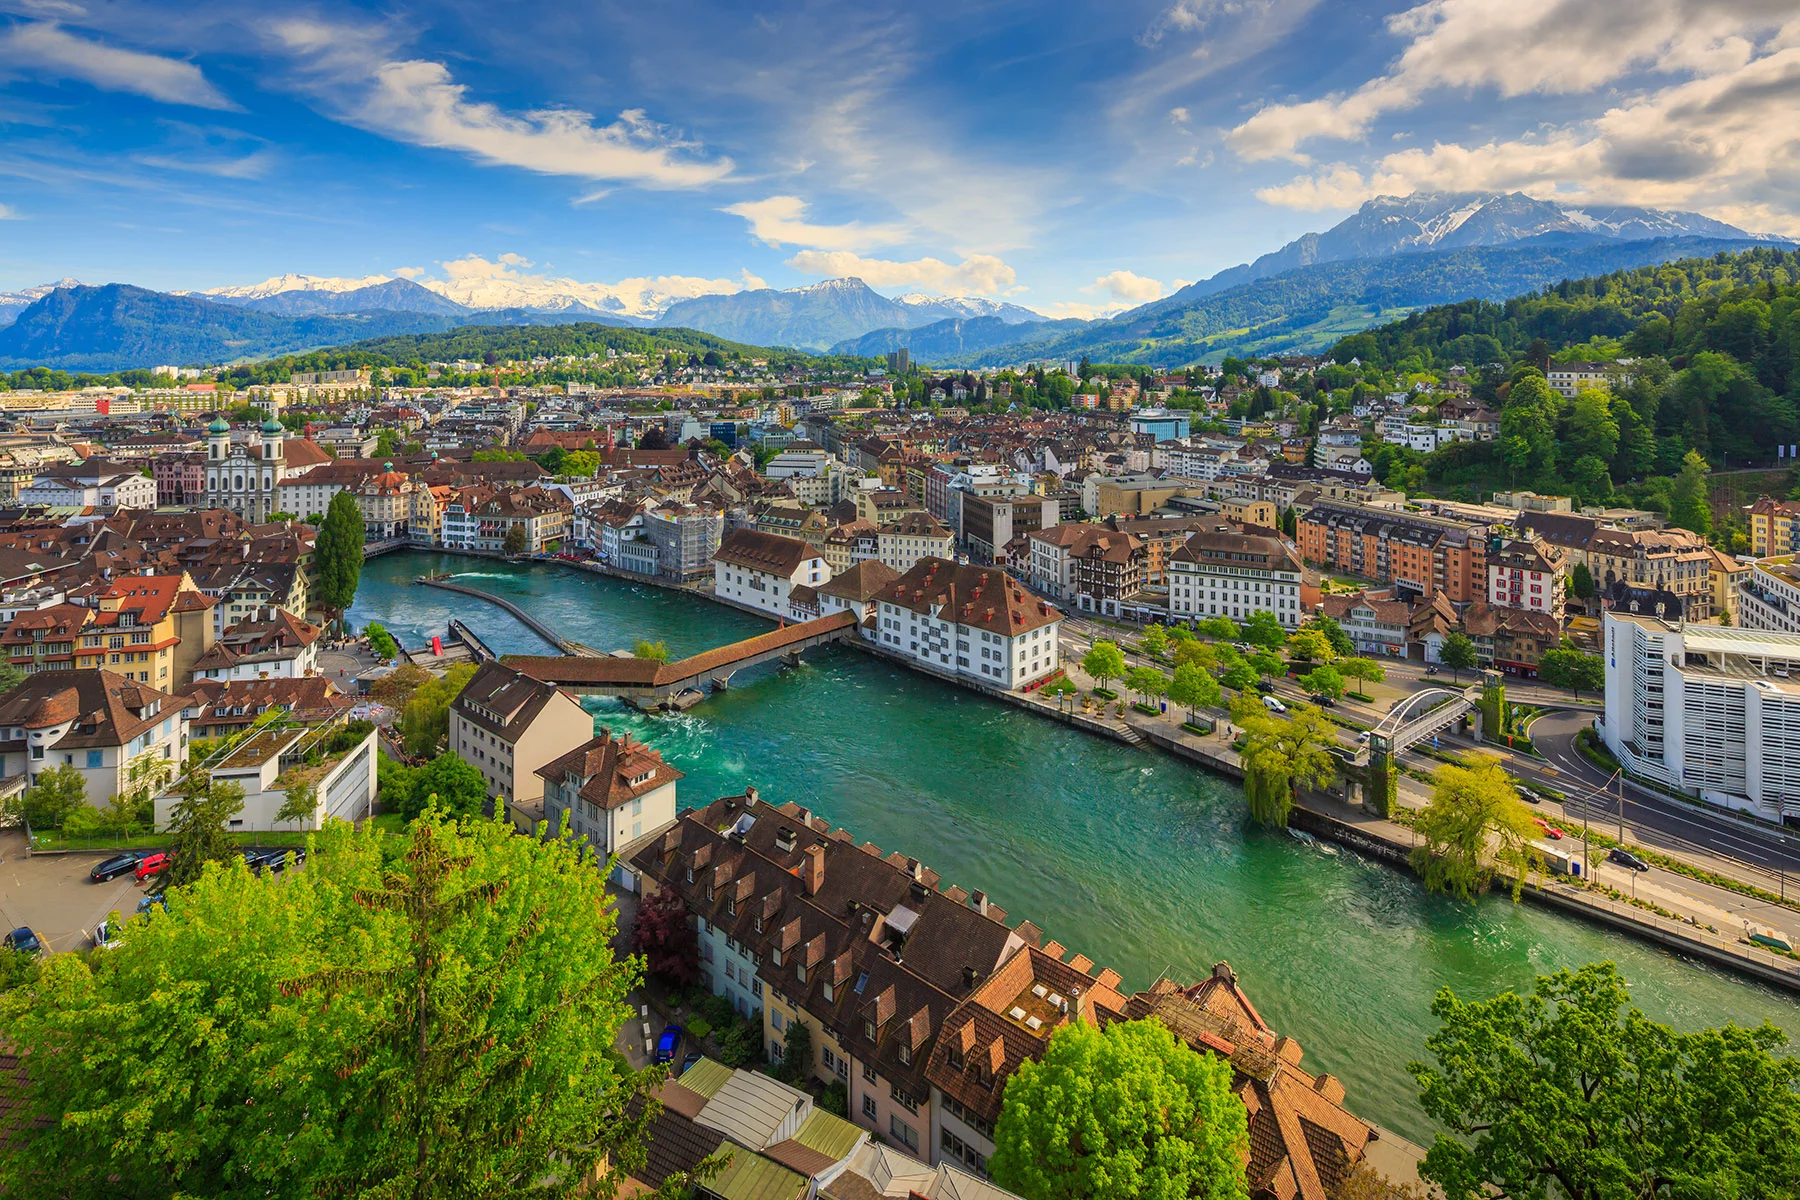 Overhead view of Lucerne, Switzerland